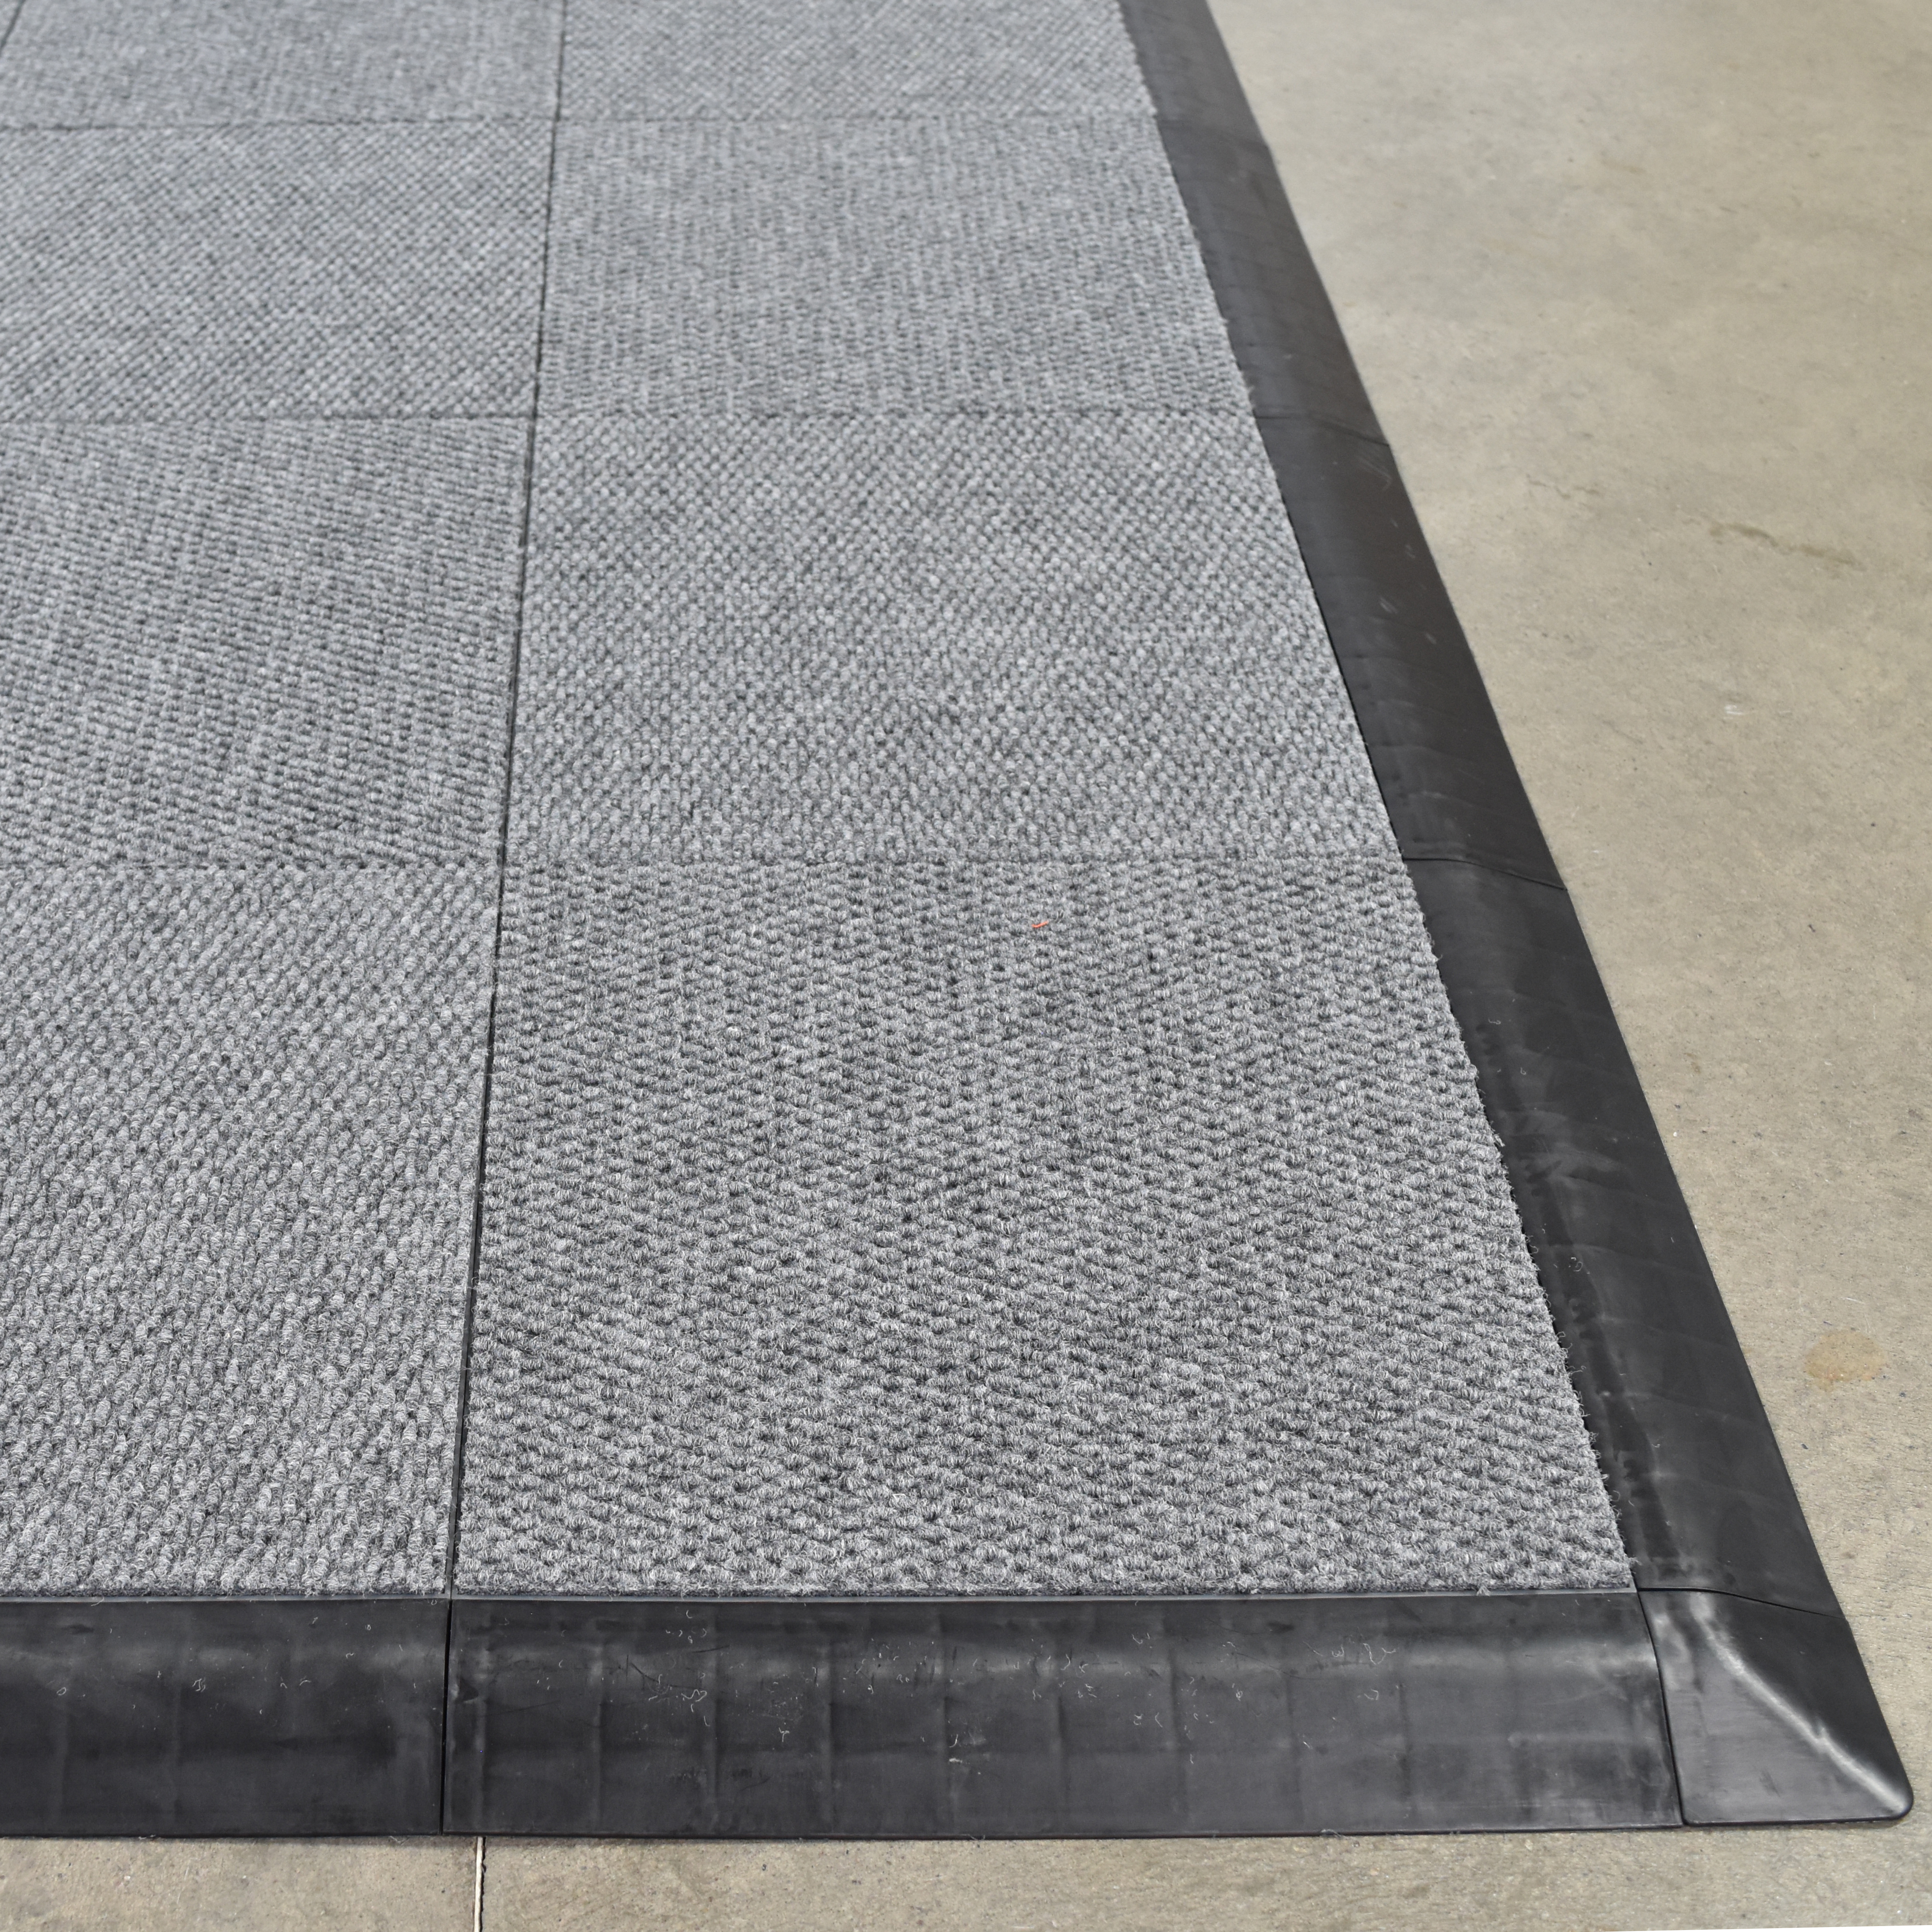 Carpet Square Modular Trade Show Tiles 20x30 Ft. Kit gray corner with borders